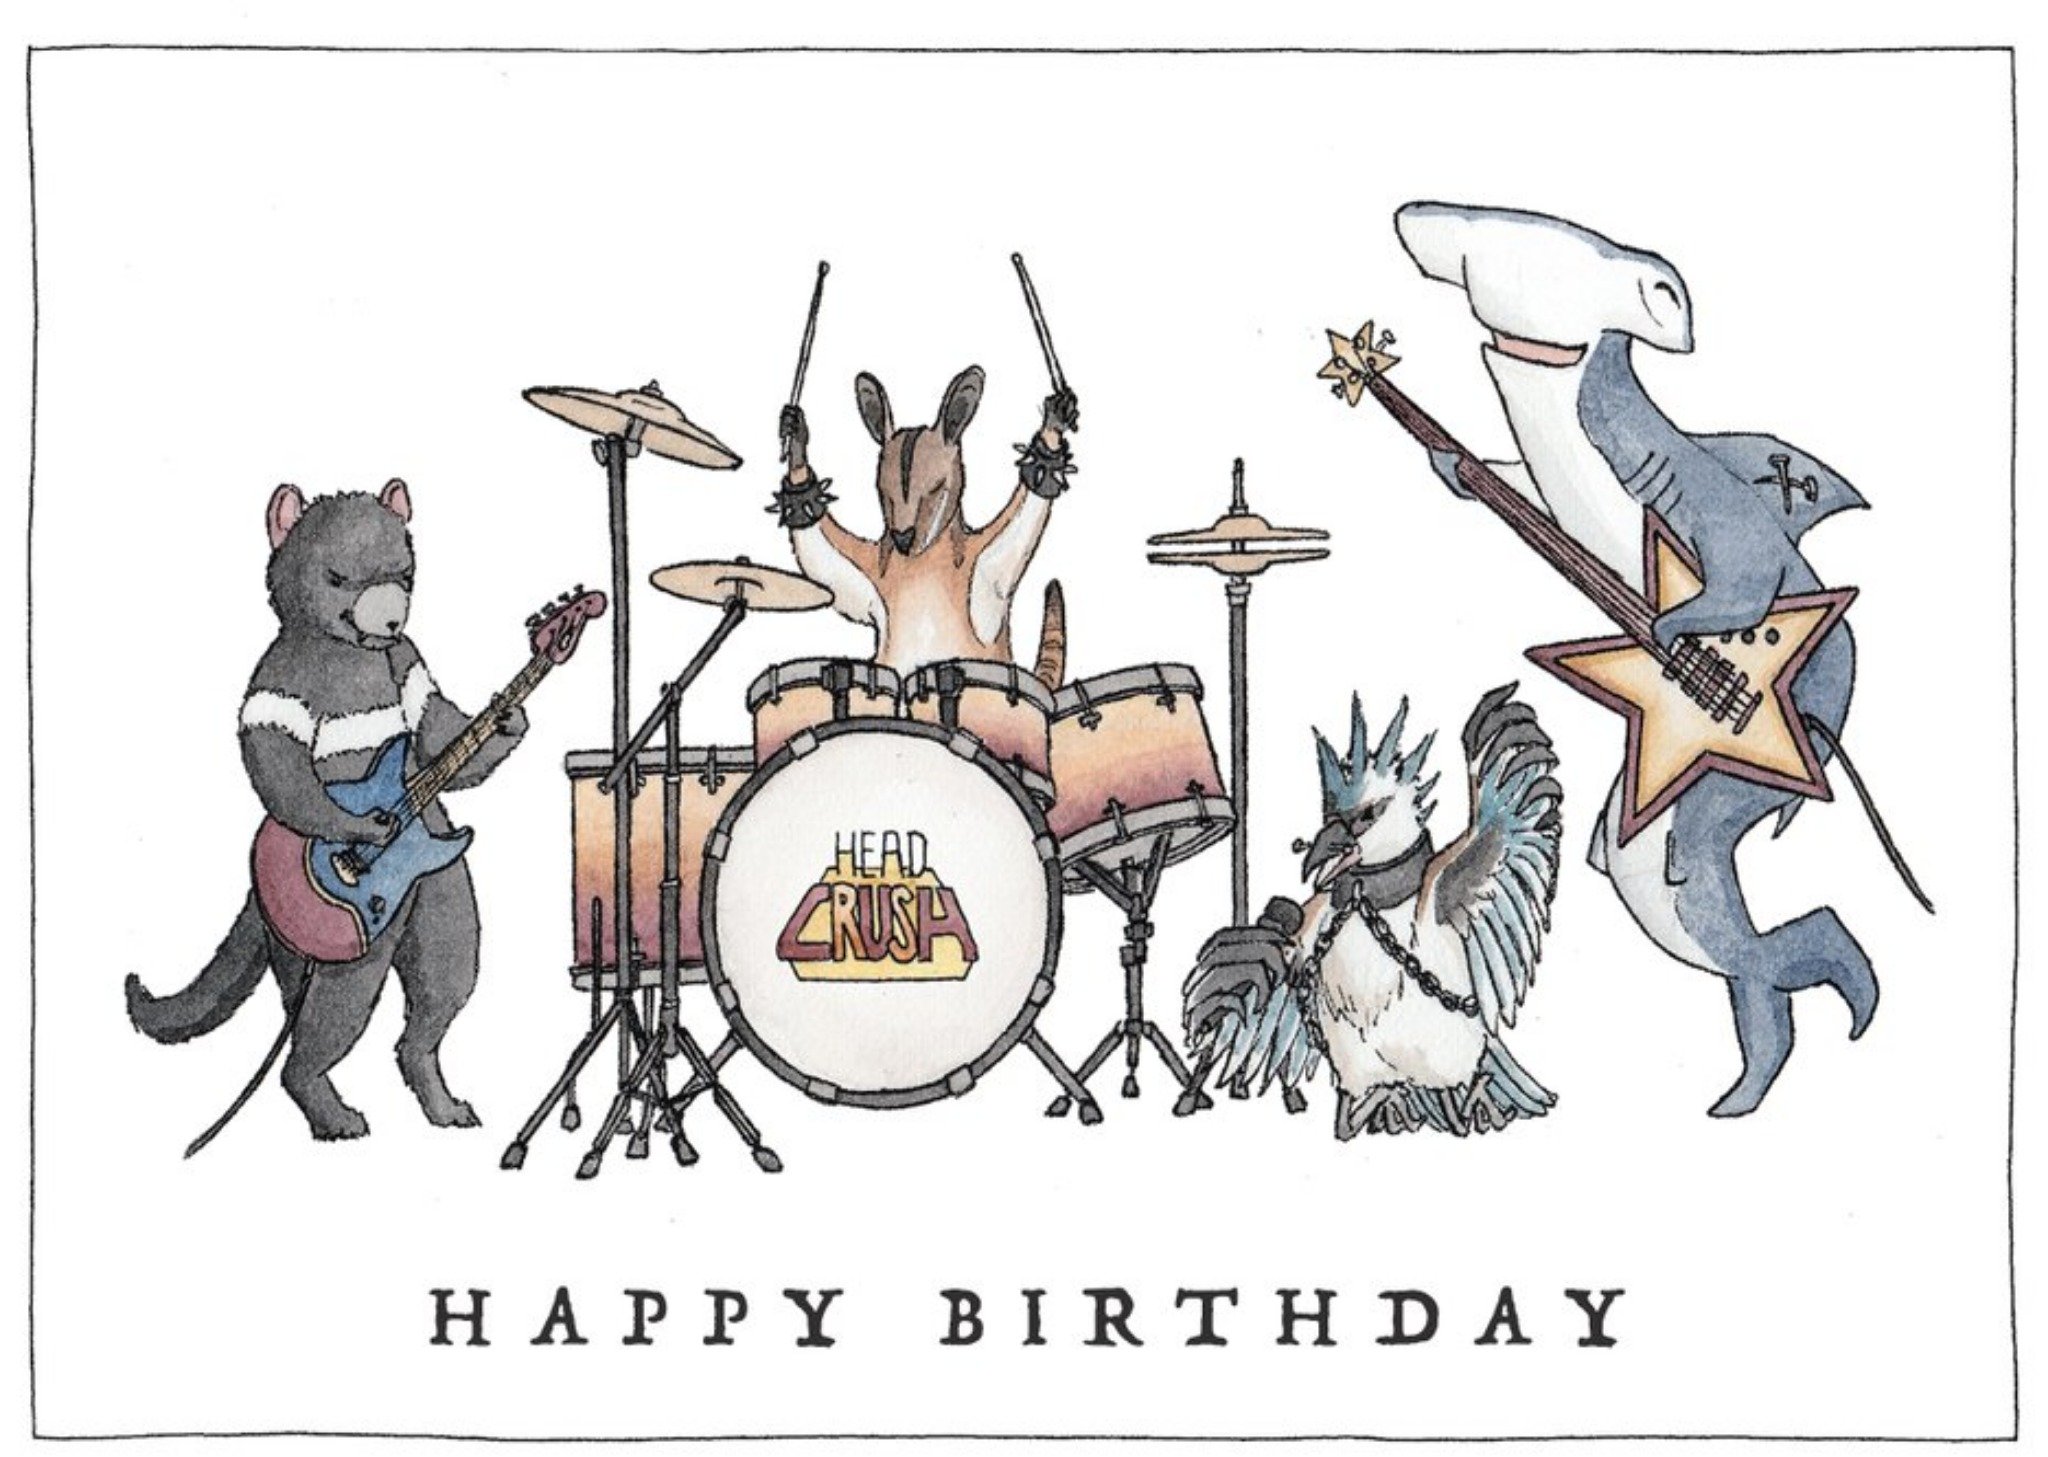 Moonpig Illustration Of A Cool Animal Rock Band Birthday Card, Large